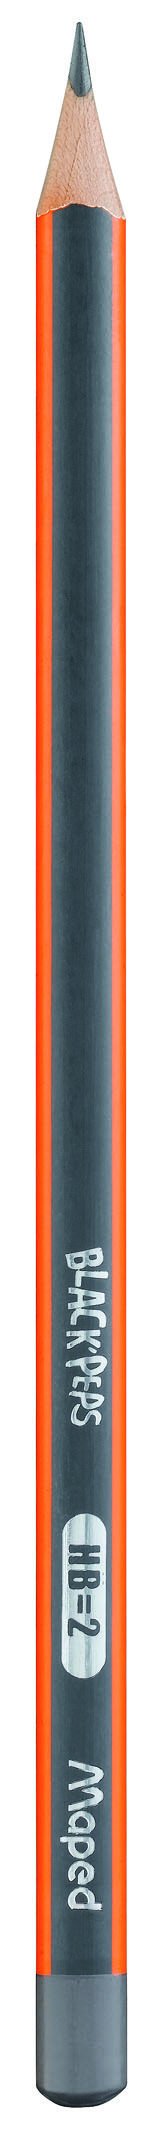 Maped Black'Peps HB - Wooden Pencils (HB, Black, Orange) Pack of 12 مابد اقلام رصاص خشبية اتش بي من بلاك بيبس (اتش بي، اسود، برتقالي) عبوة من 12 قطعة